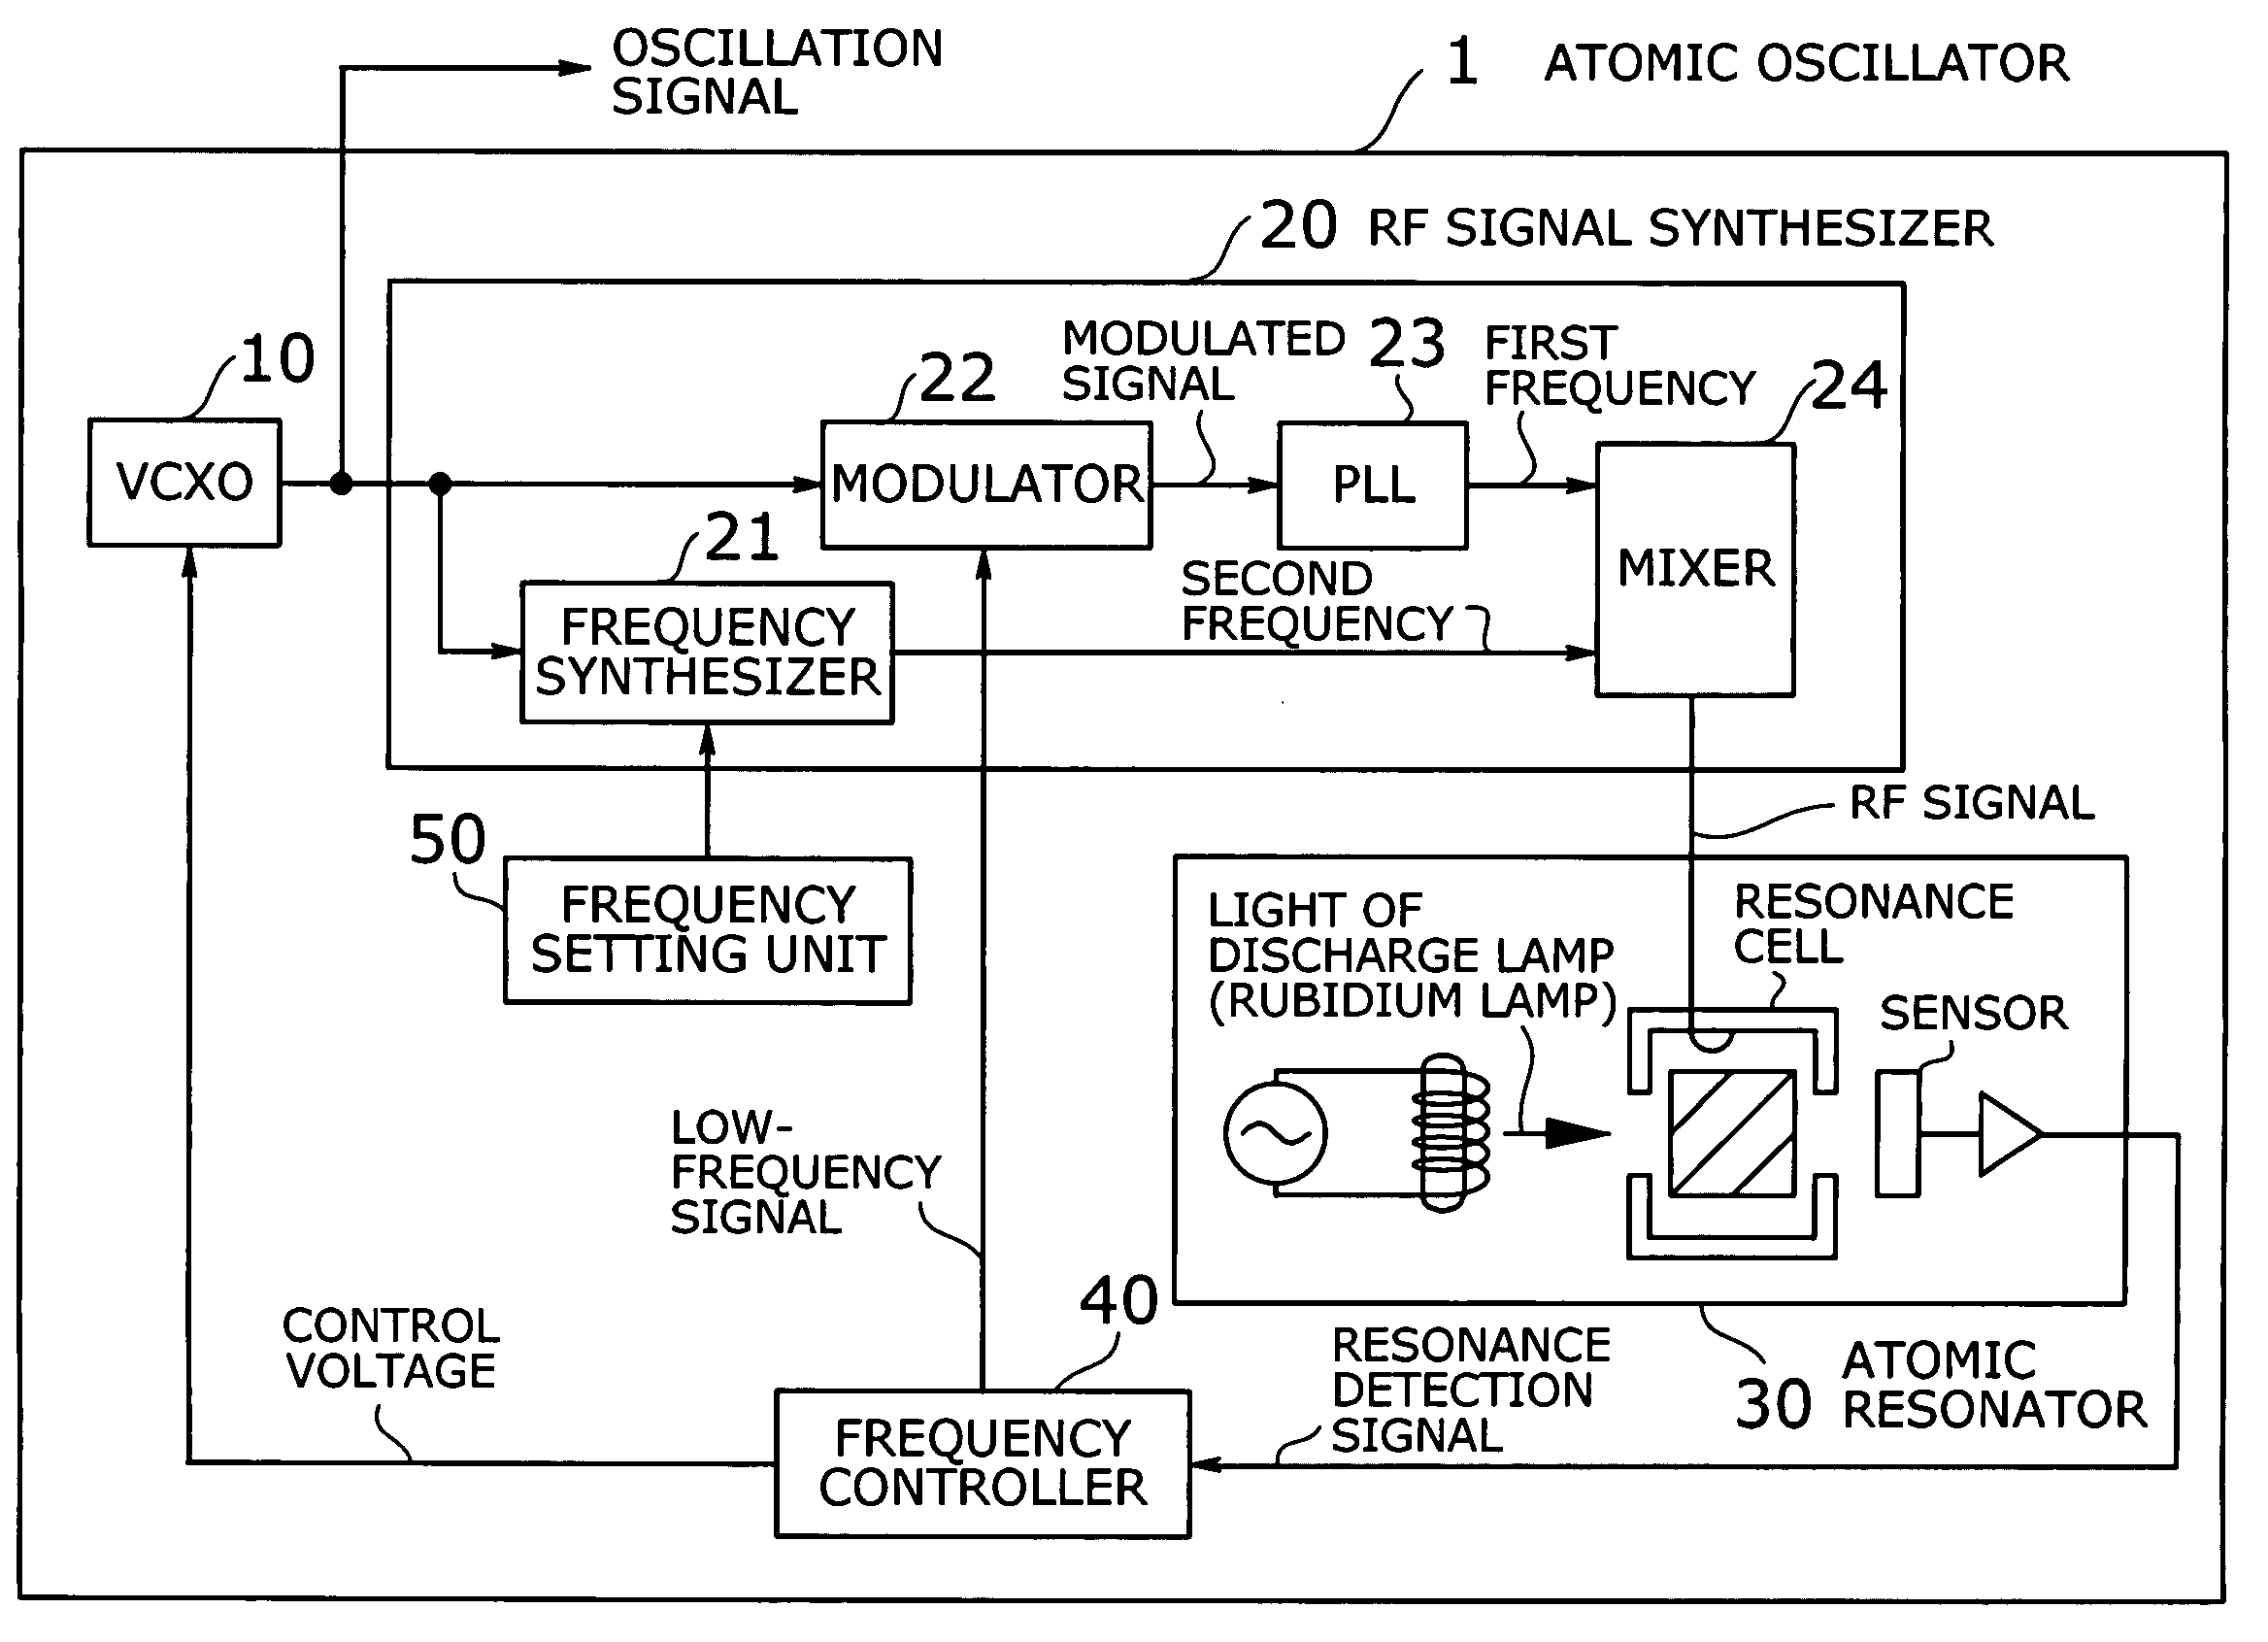 Atomic oscillator